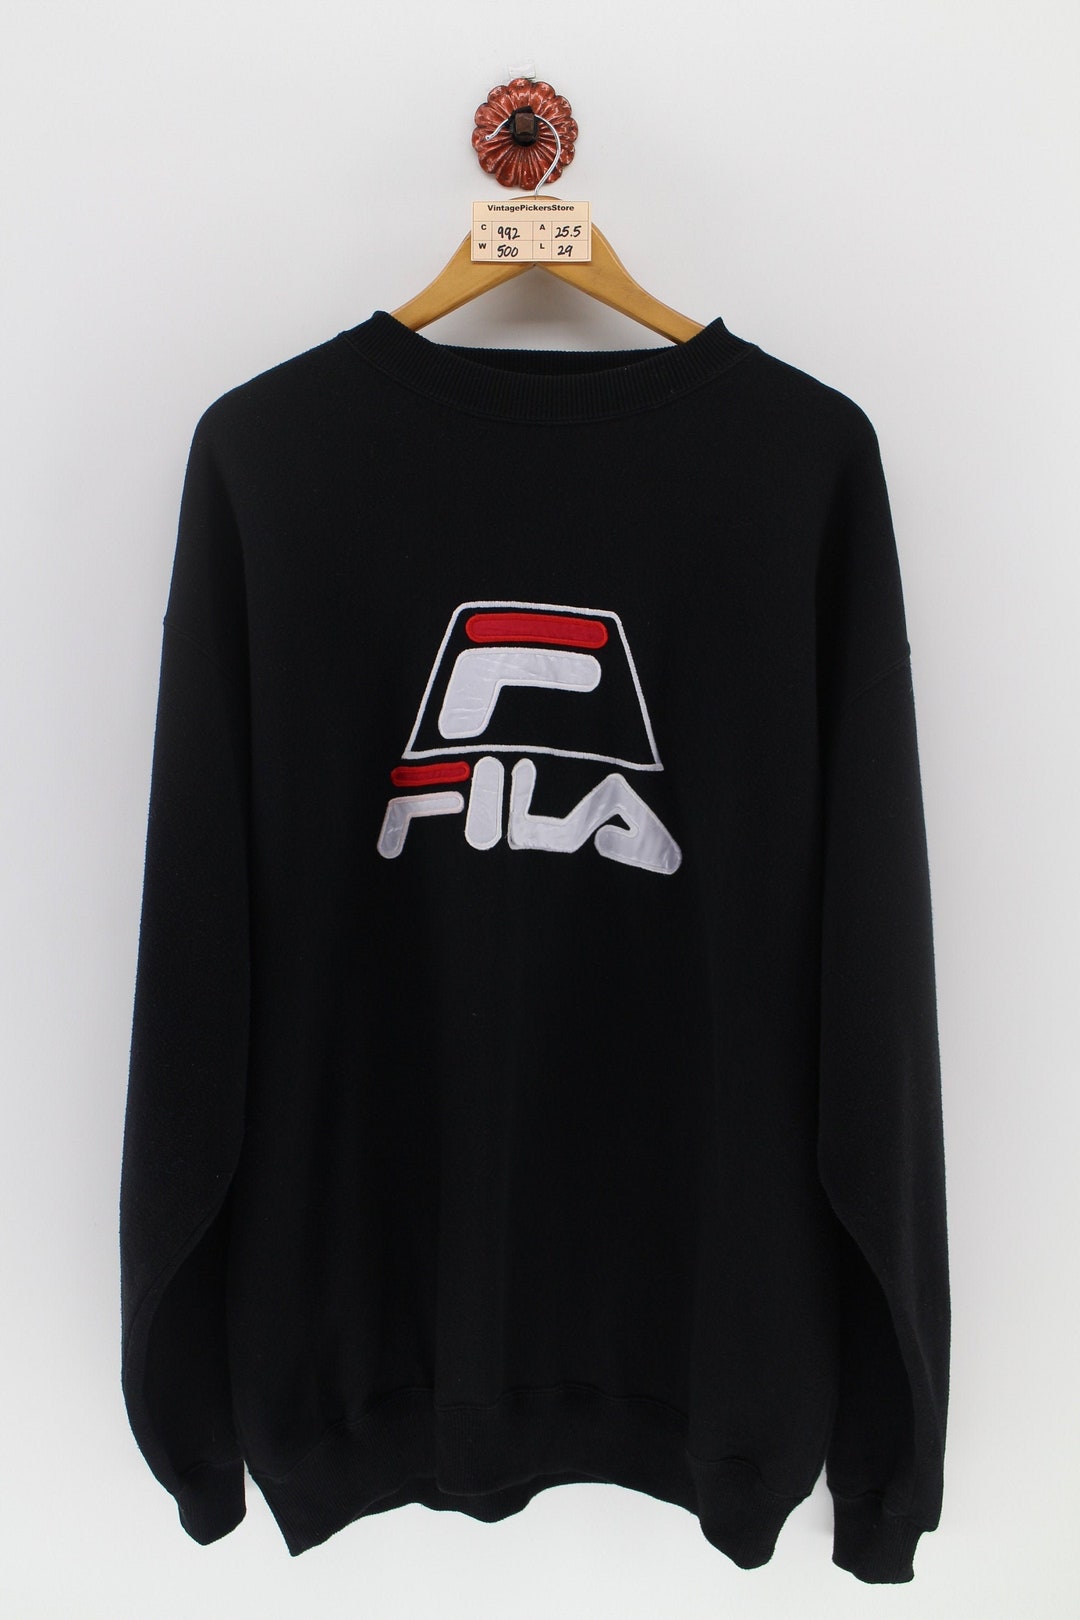 Vintage 1990's FILA Crewneck Sweater Unisex Large Fila - Etsy